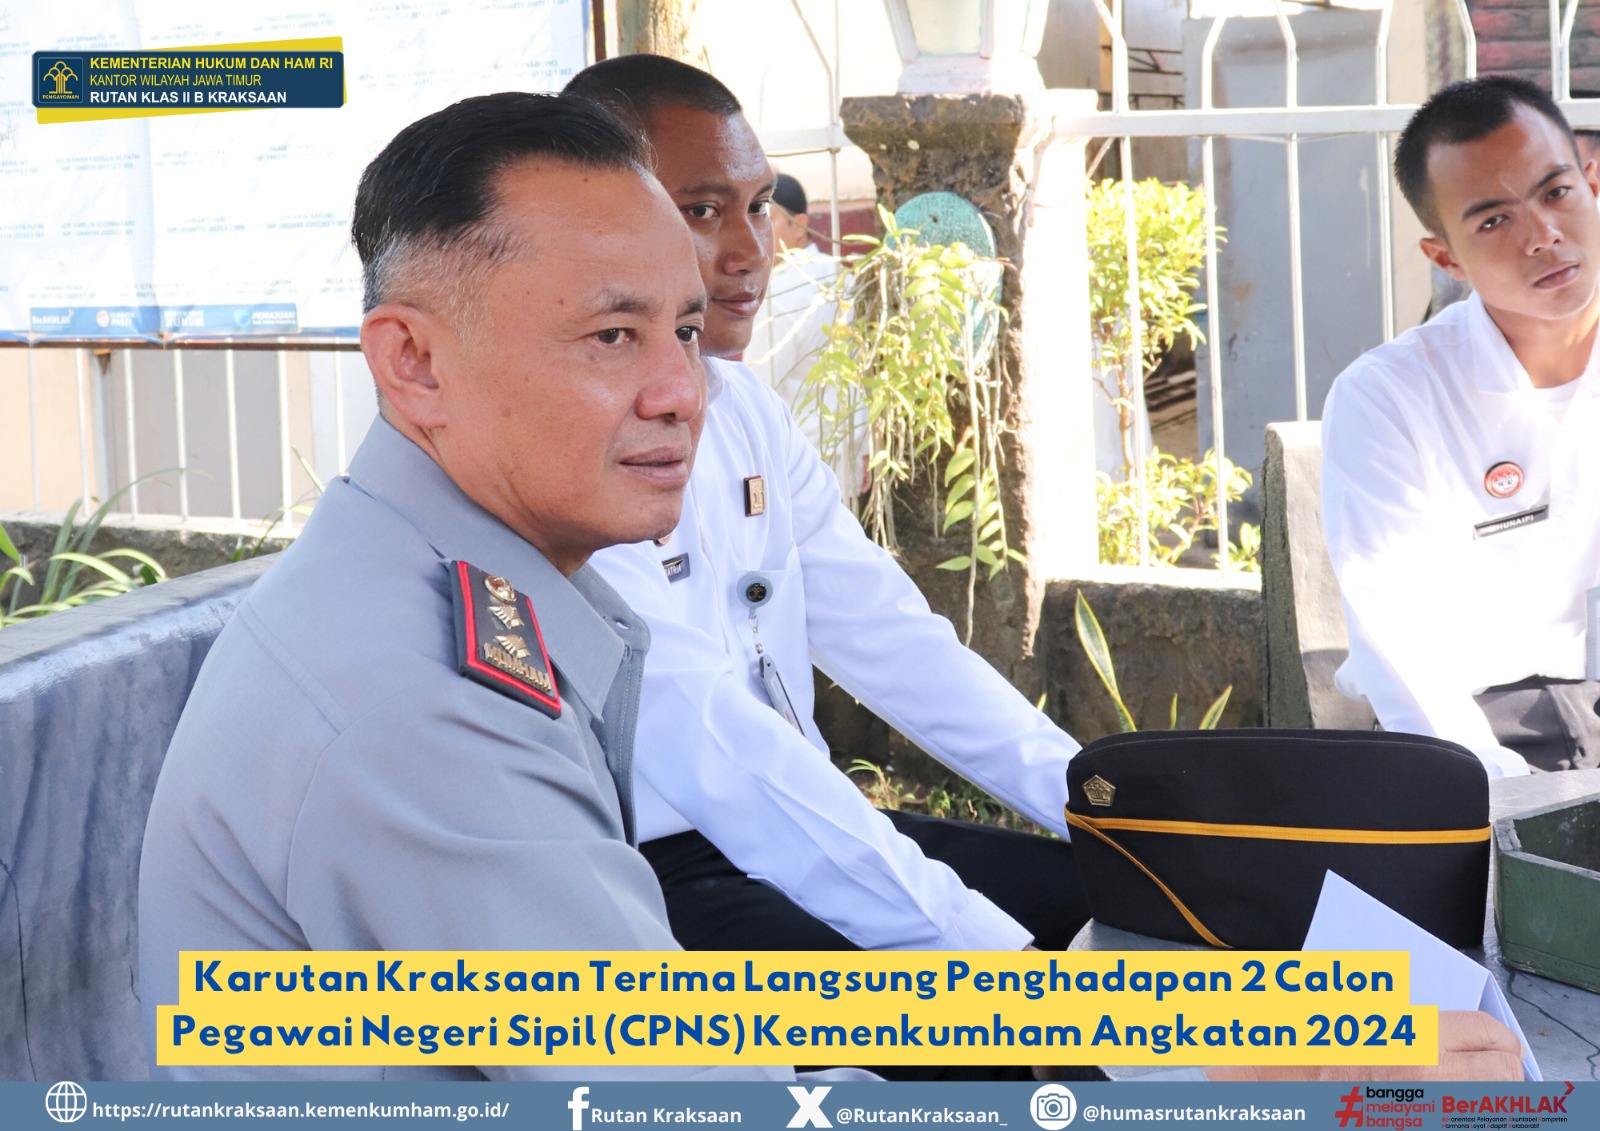 Karutan Kraksaan Terima Langsung Penghadapan 2 Calon Pegawai Negeri Sipil (CPNS) Kemenkumham Angkatan 2024